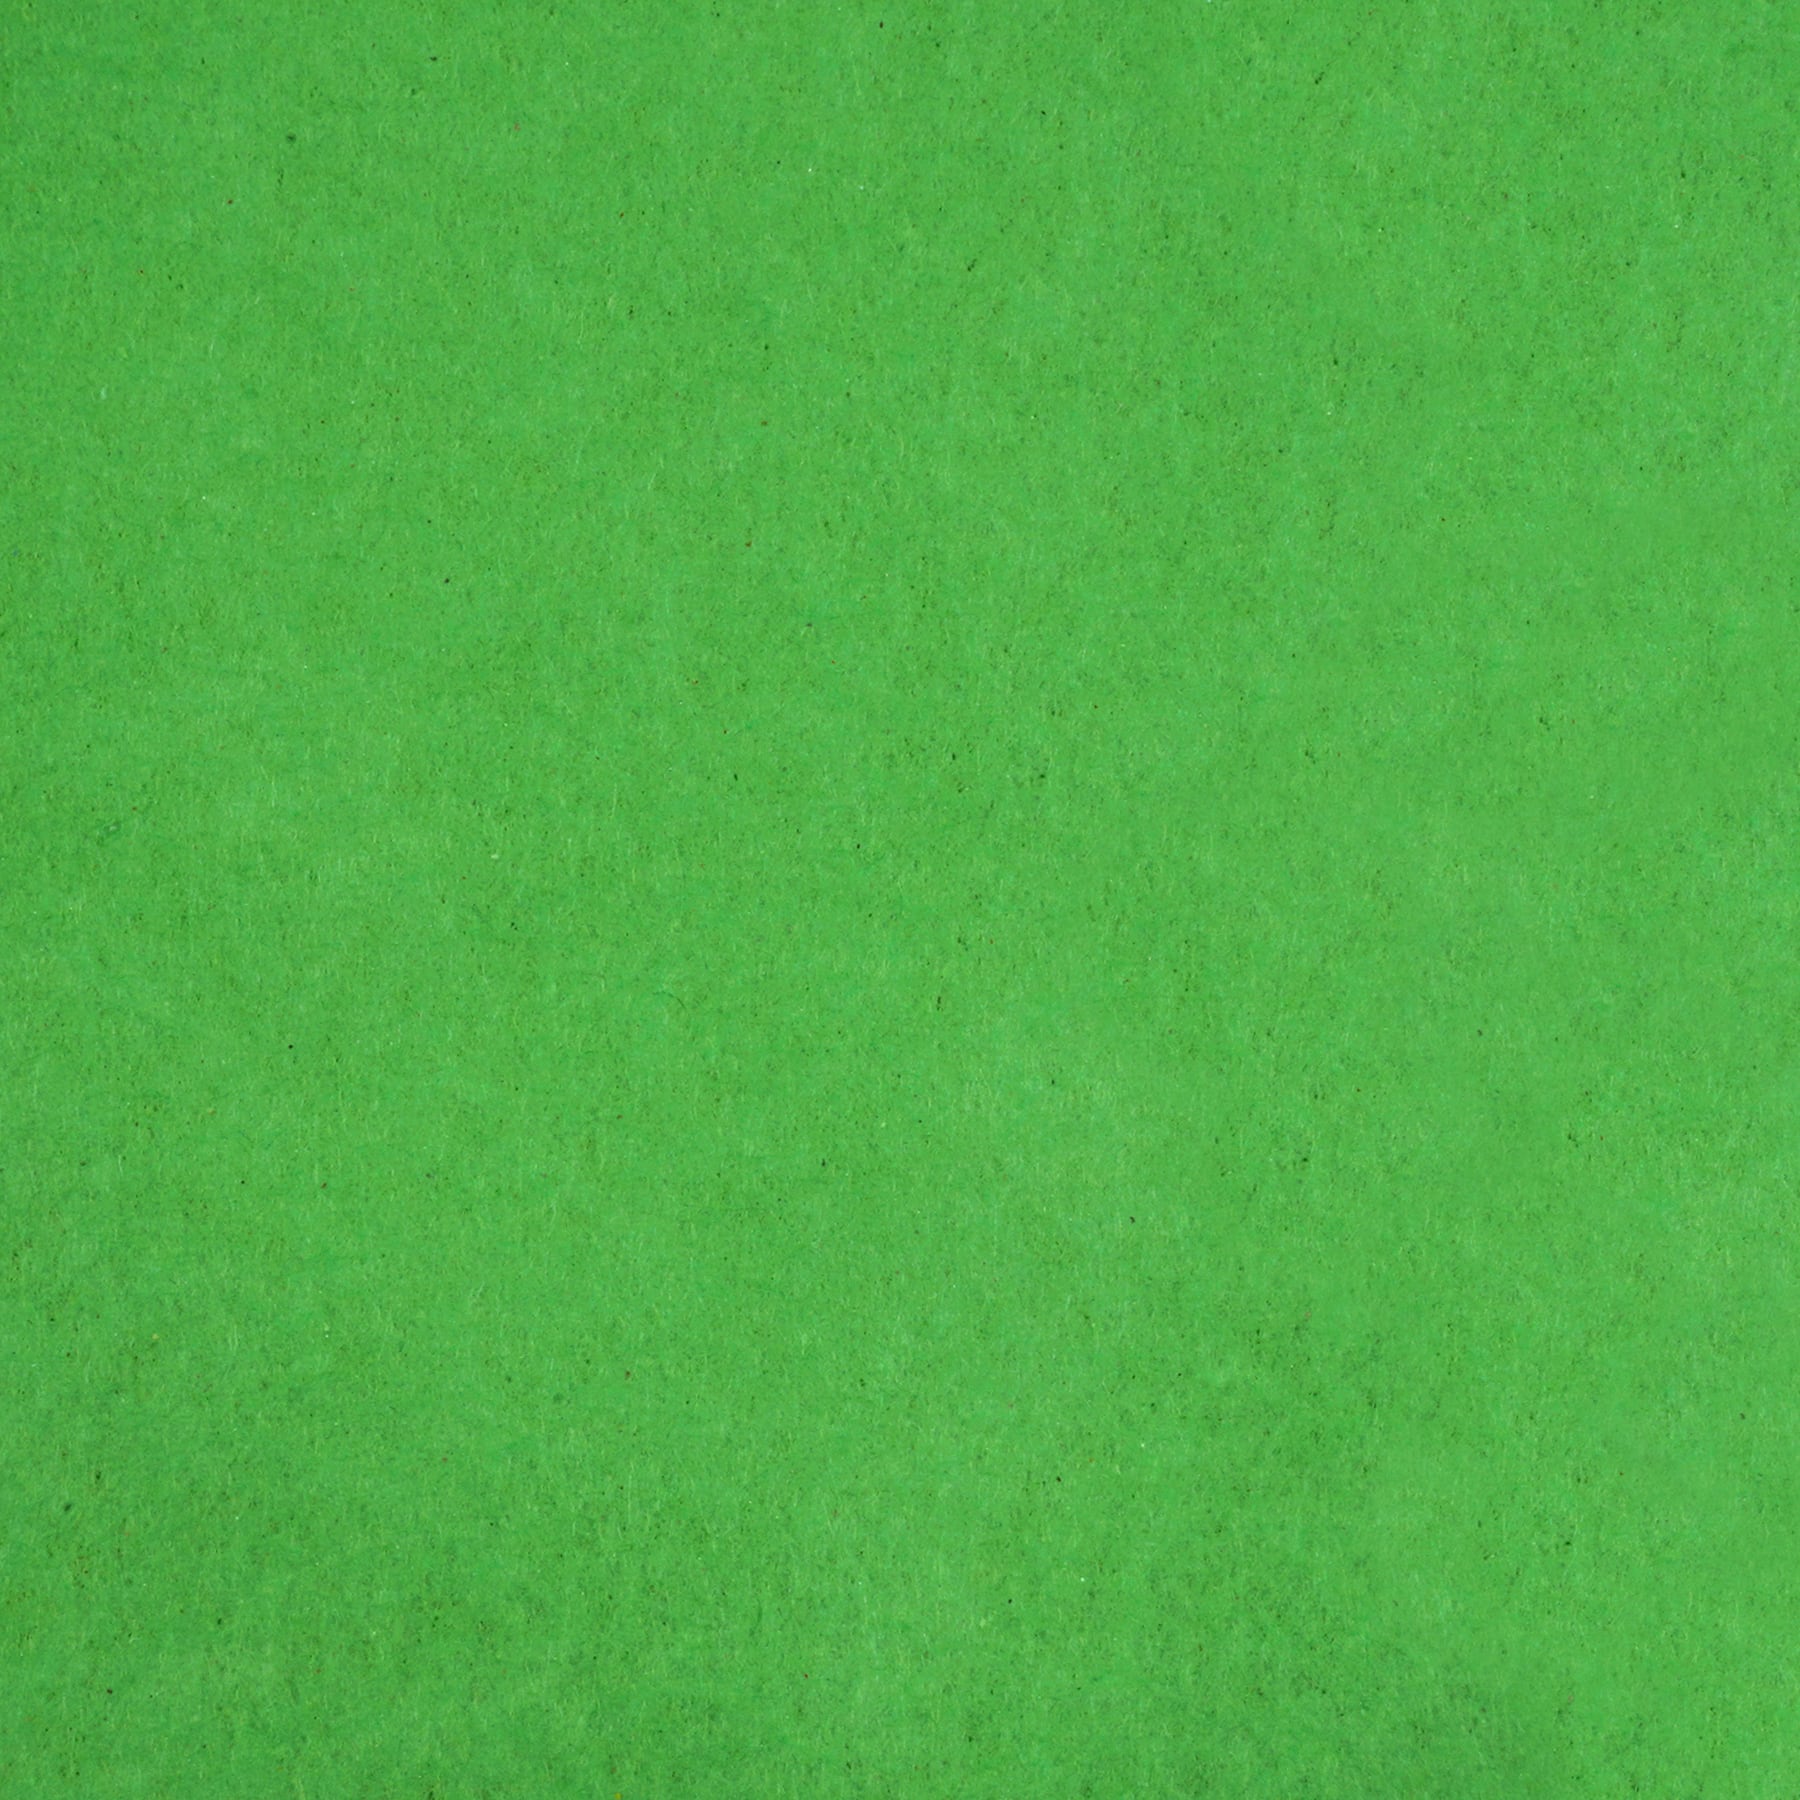 Celebrate It Festive Green Tissue Paper - 12 ct